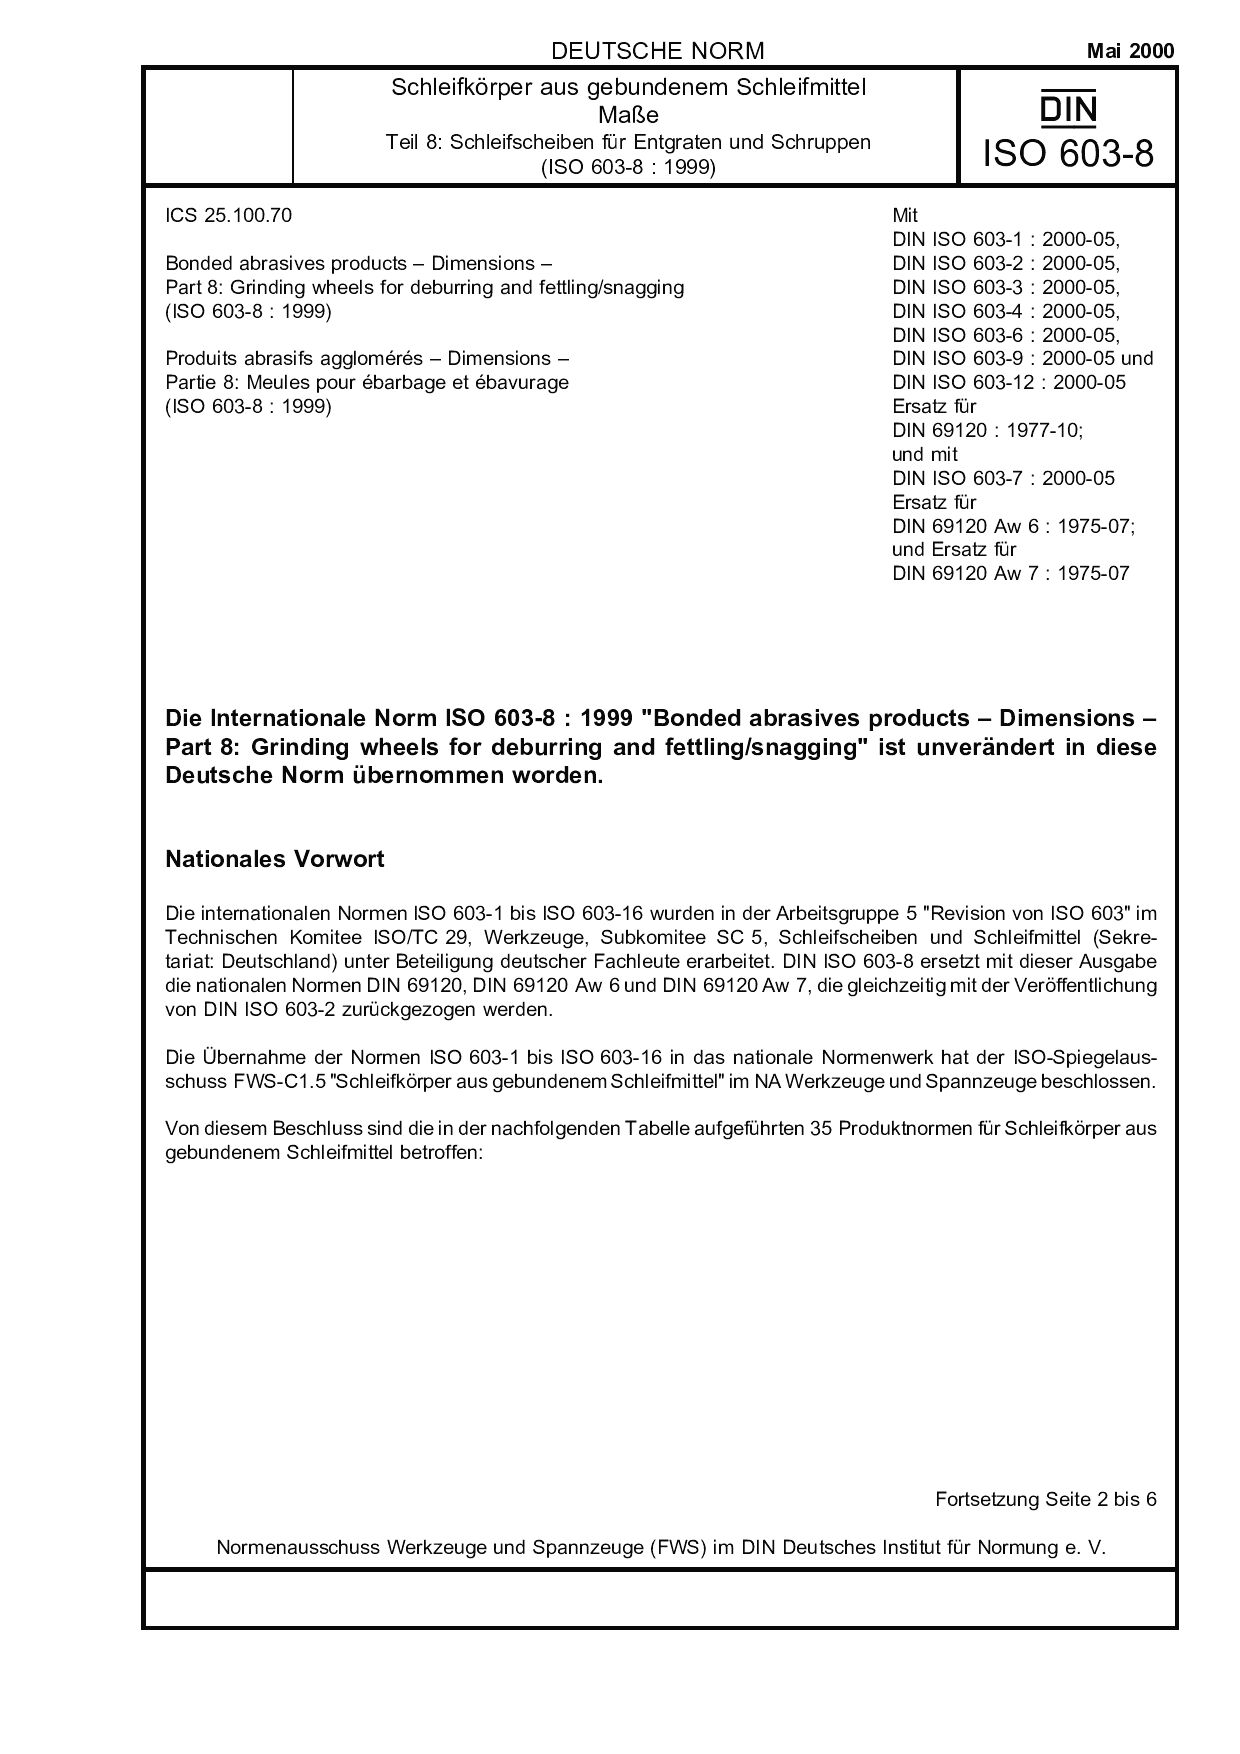 DIN ISO 603-8:2000